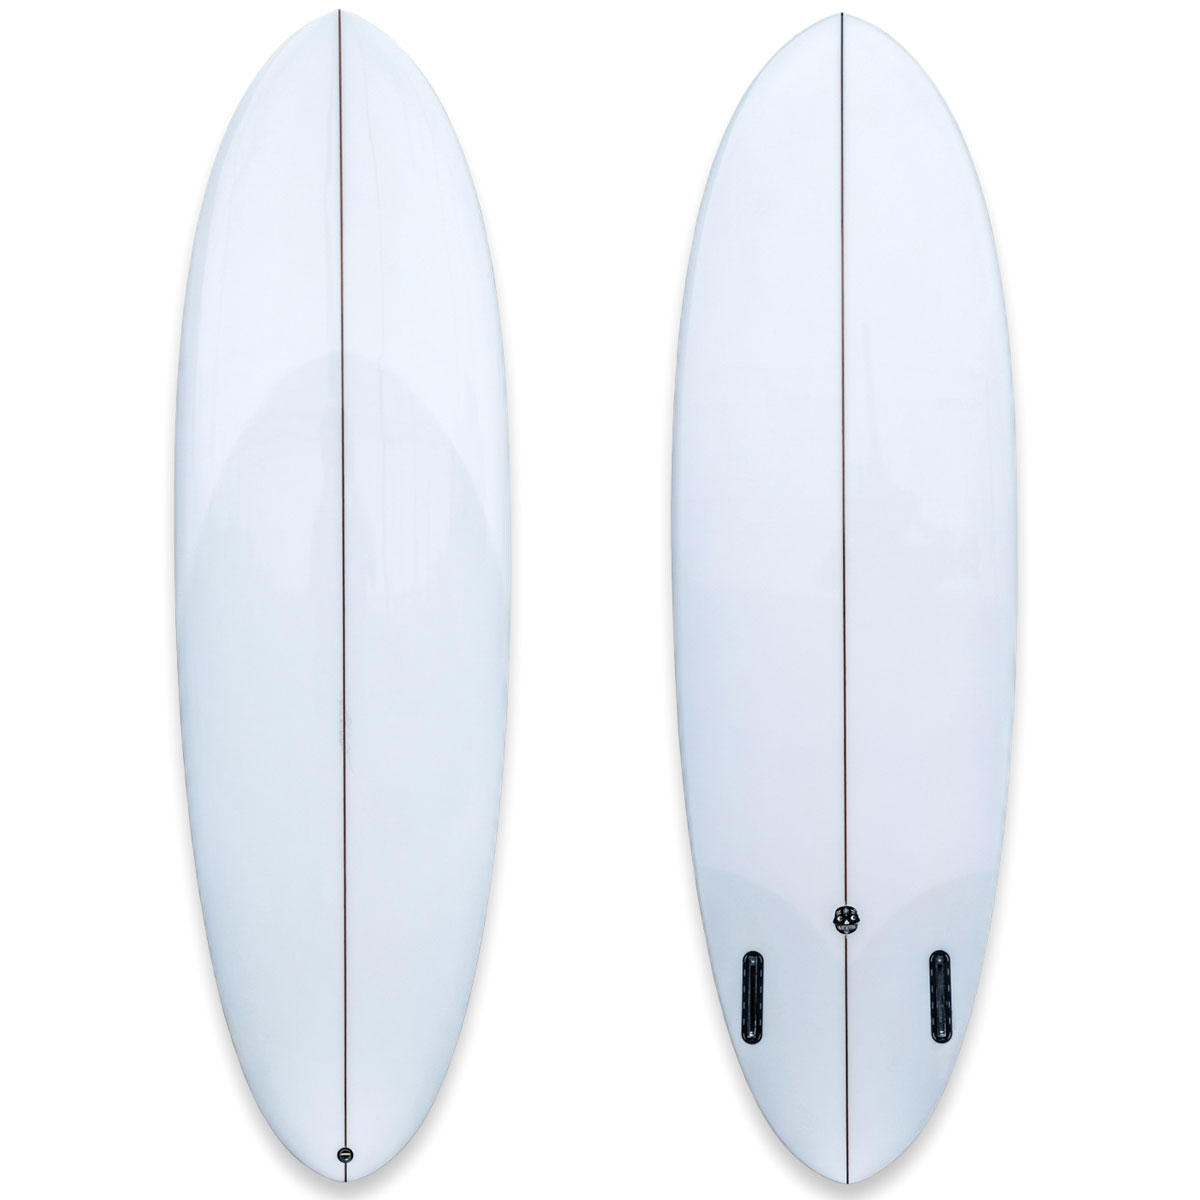 EC SURFBOARDS - Twin Pin | NAKISURF ナキサーフボードカリフォルニア